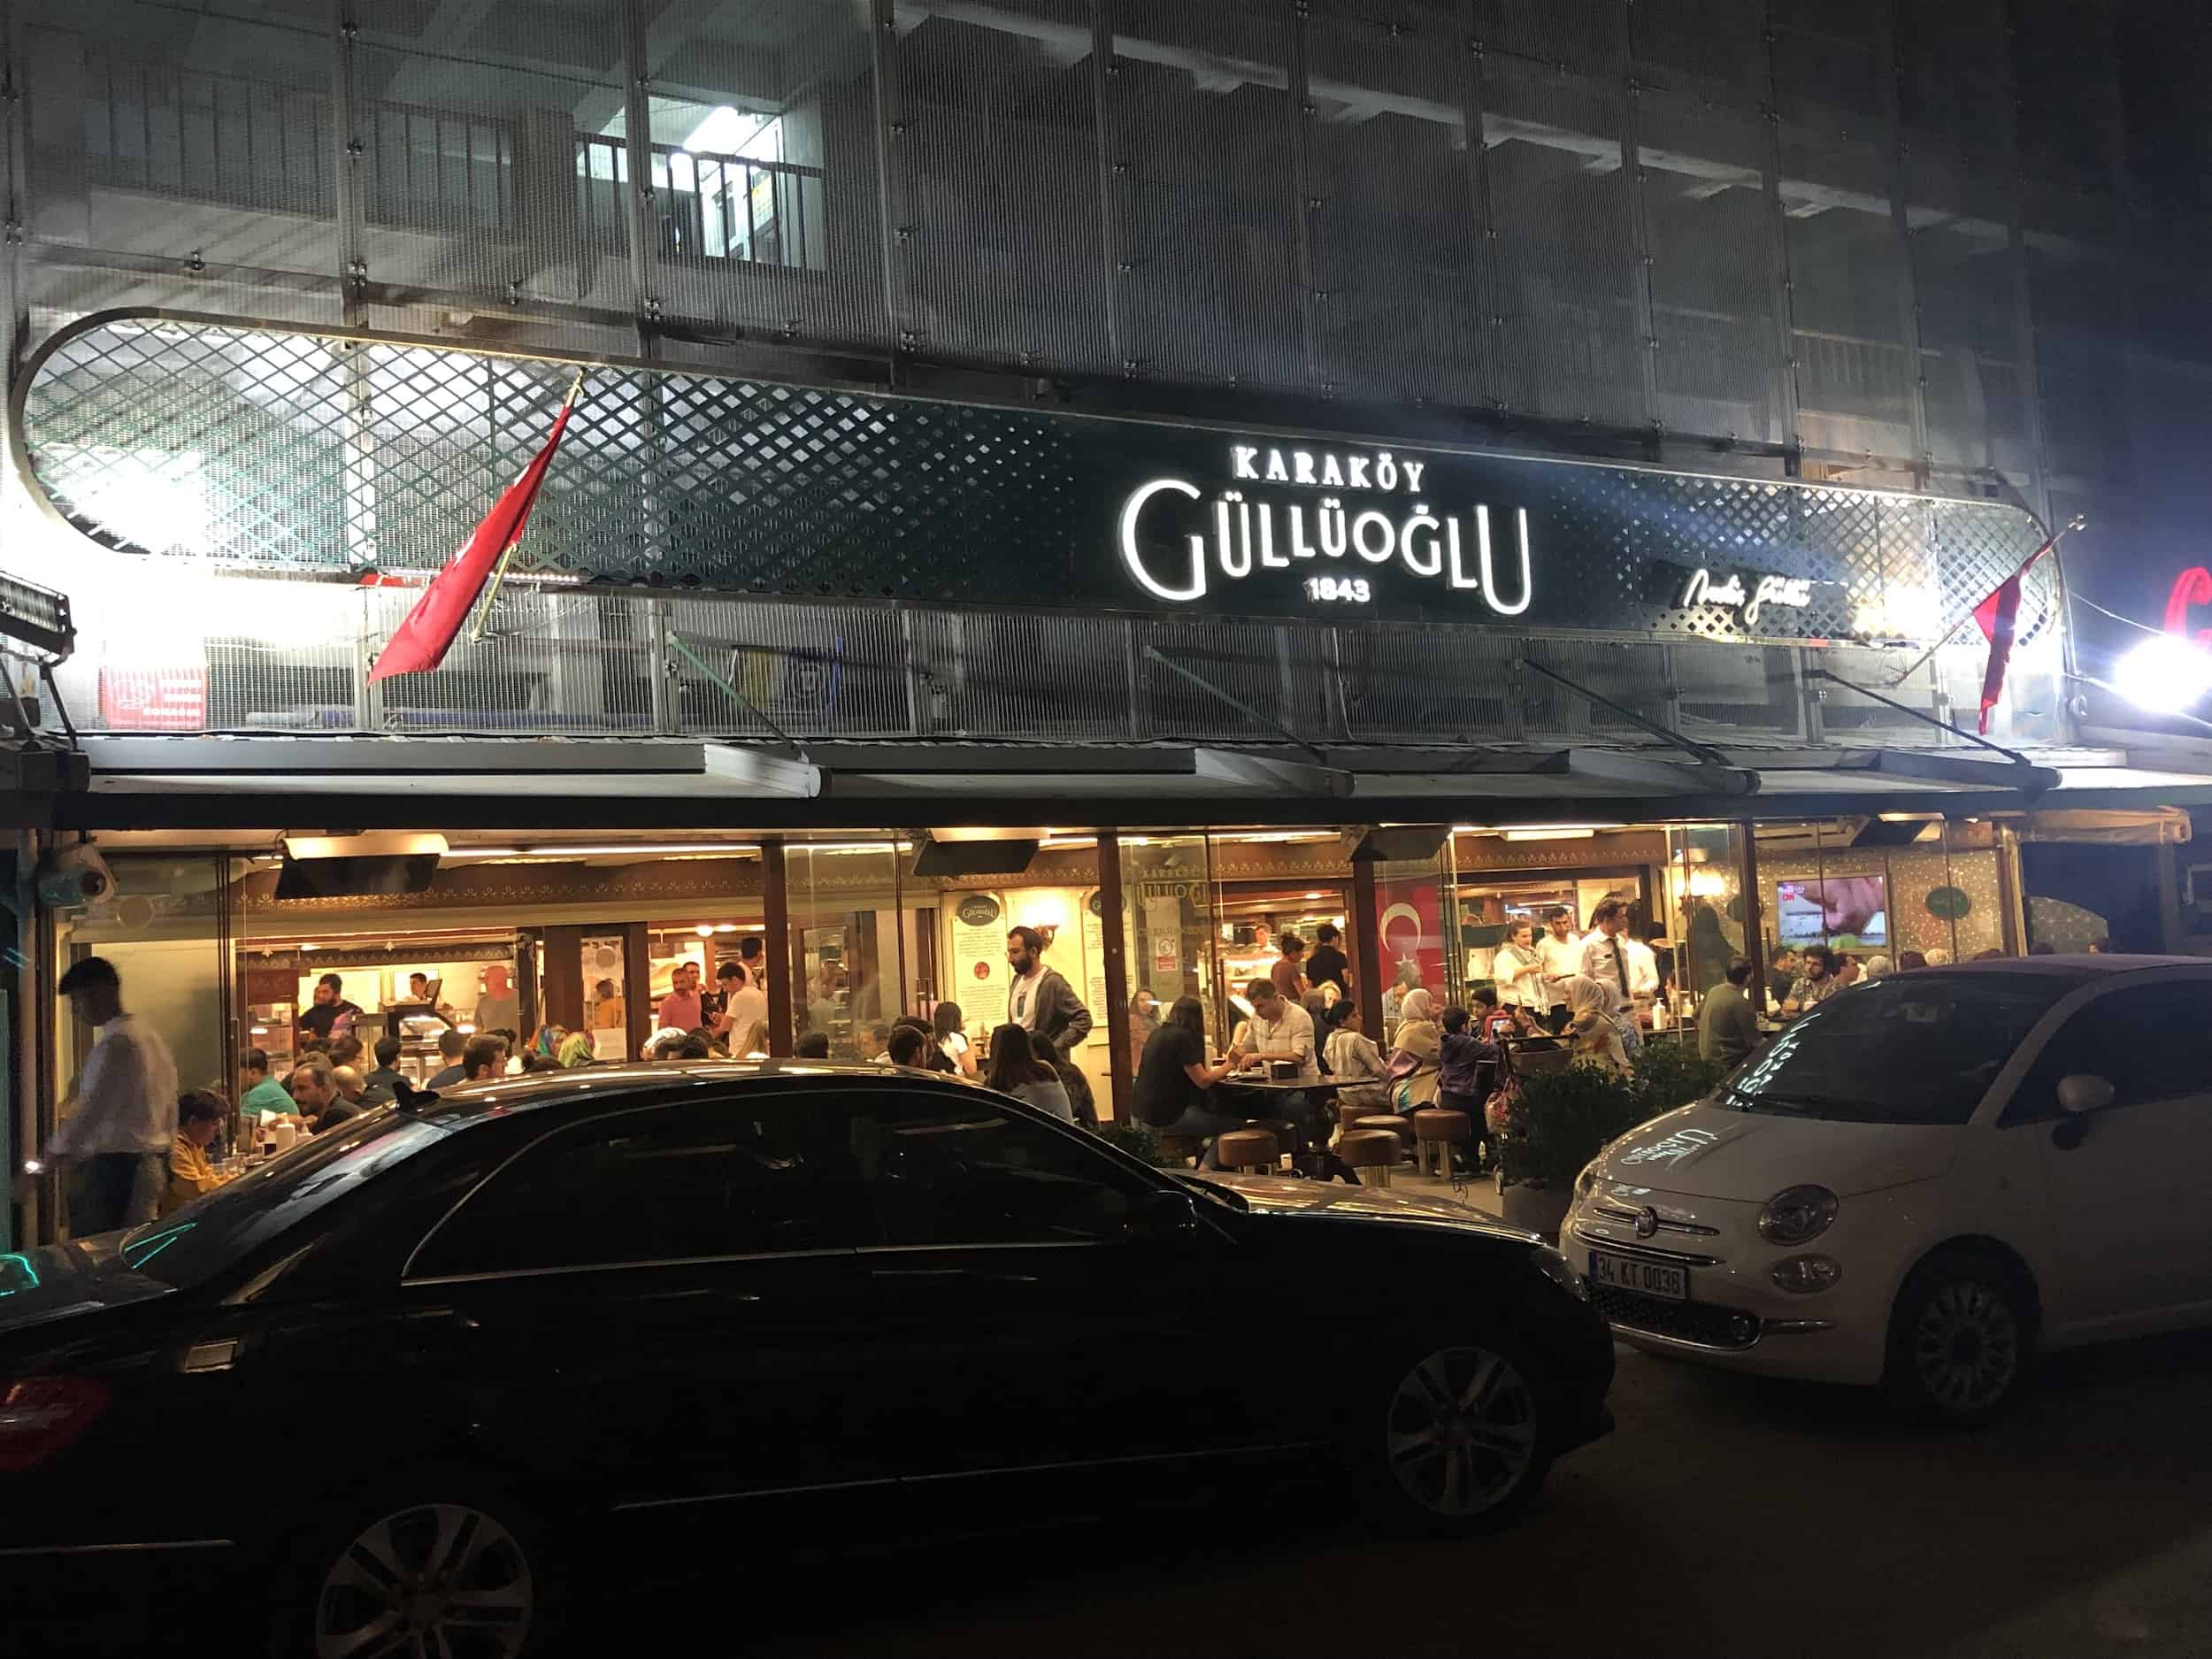 Karaköy Güllüoğlu in Karaköy, Istanbul, Turkey